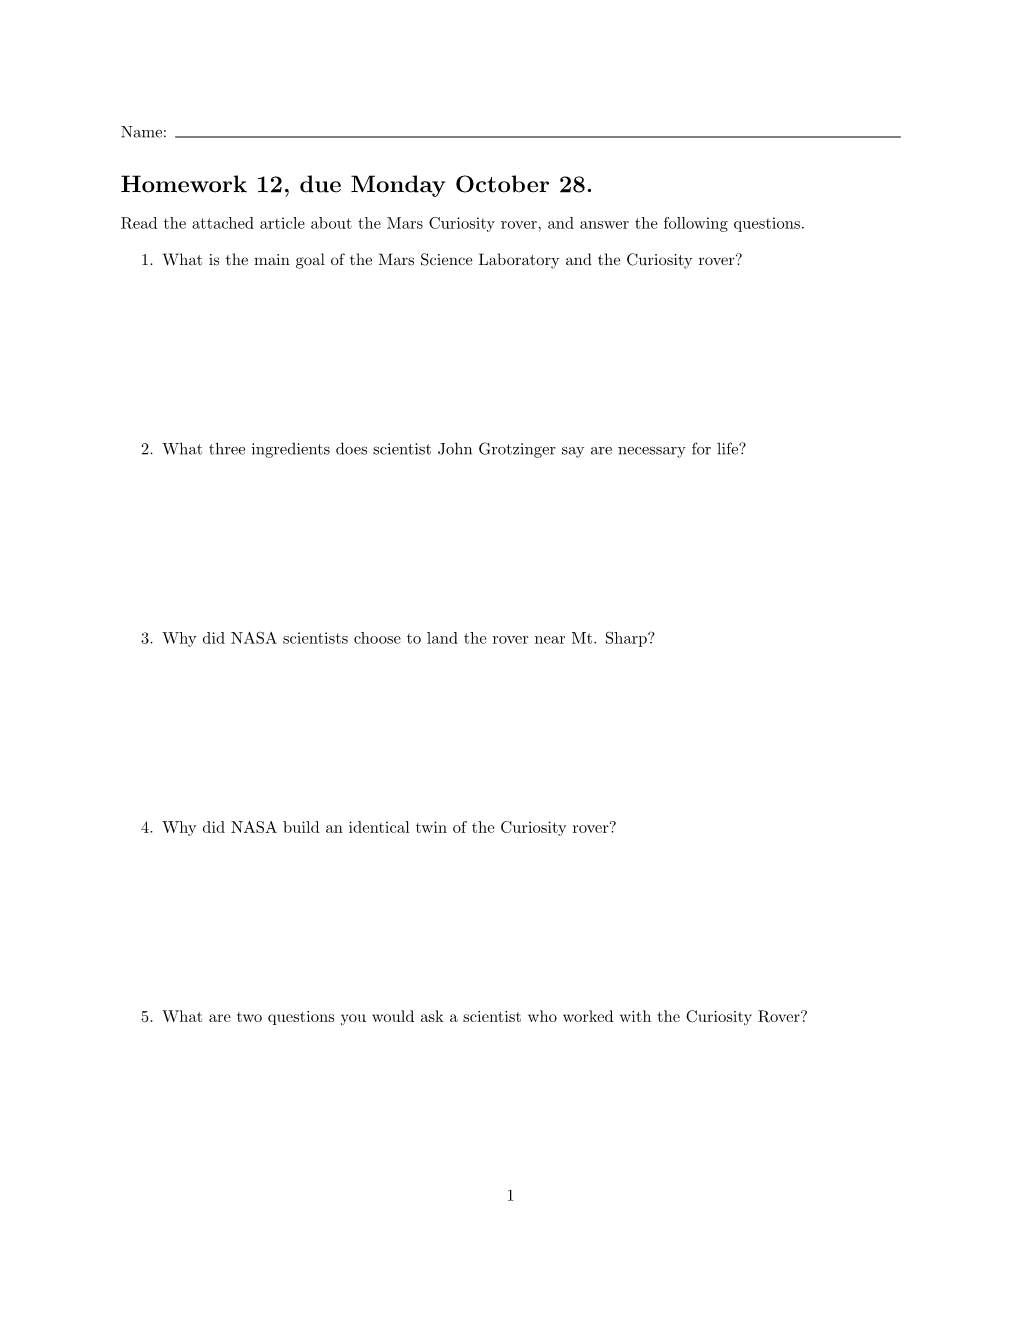 Homework 12, Due Monday October 28